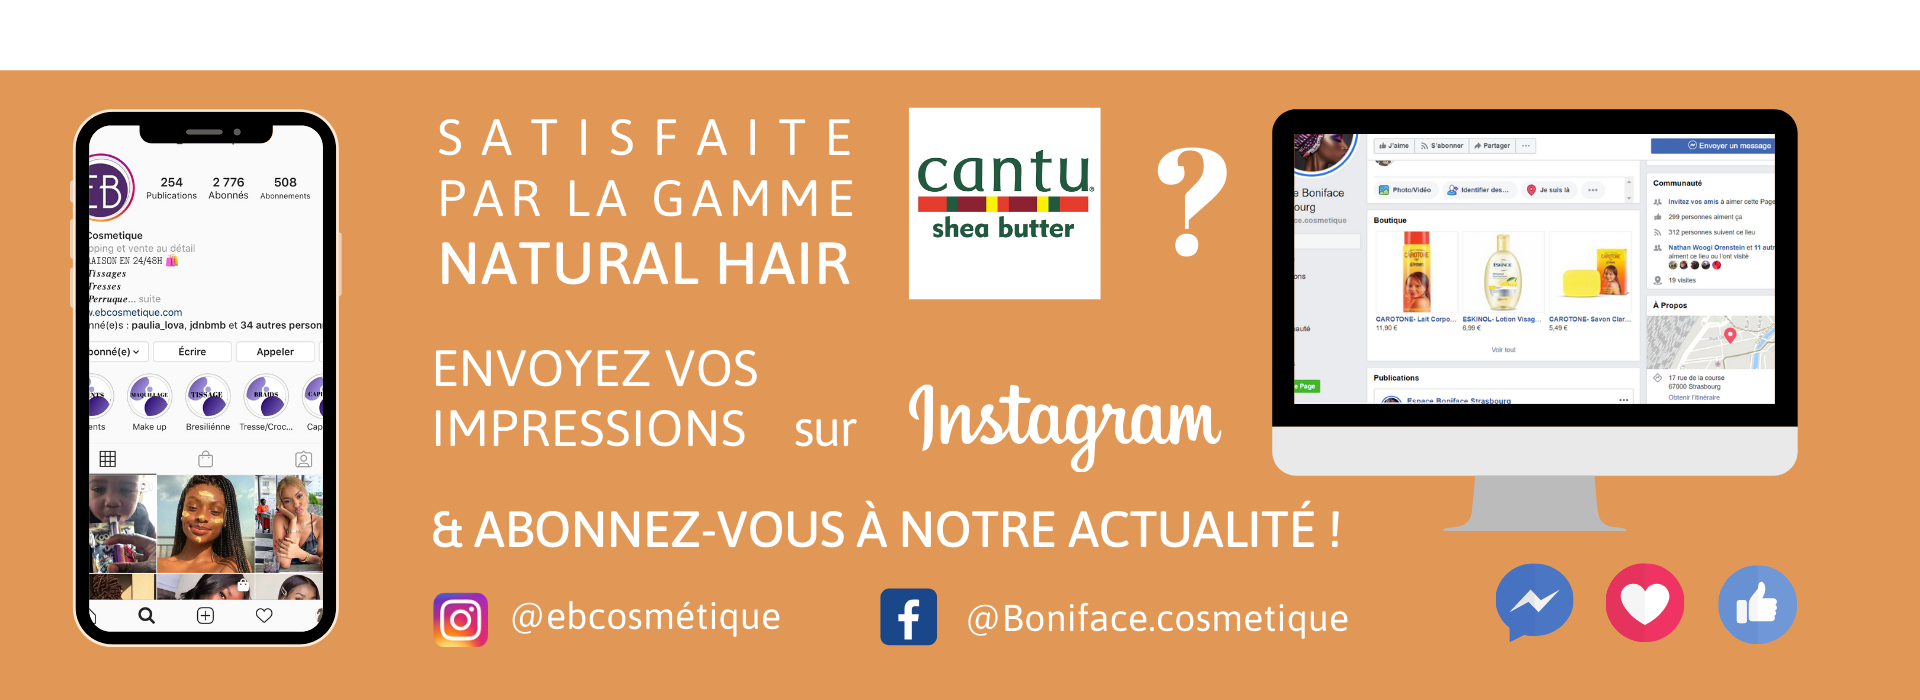 fiche produit ebcosmetique cantu shea butter natural hair extra hold edge gel Mousse routine capillaire afro bouclé facebook instagram